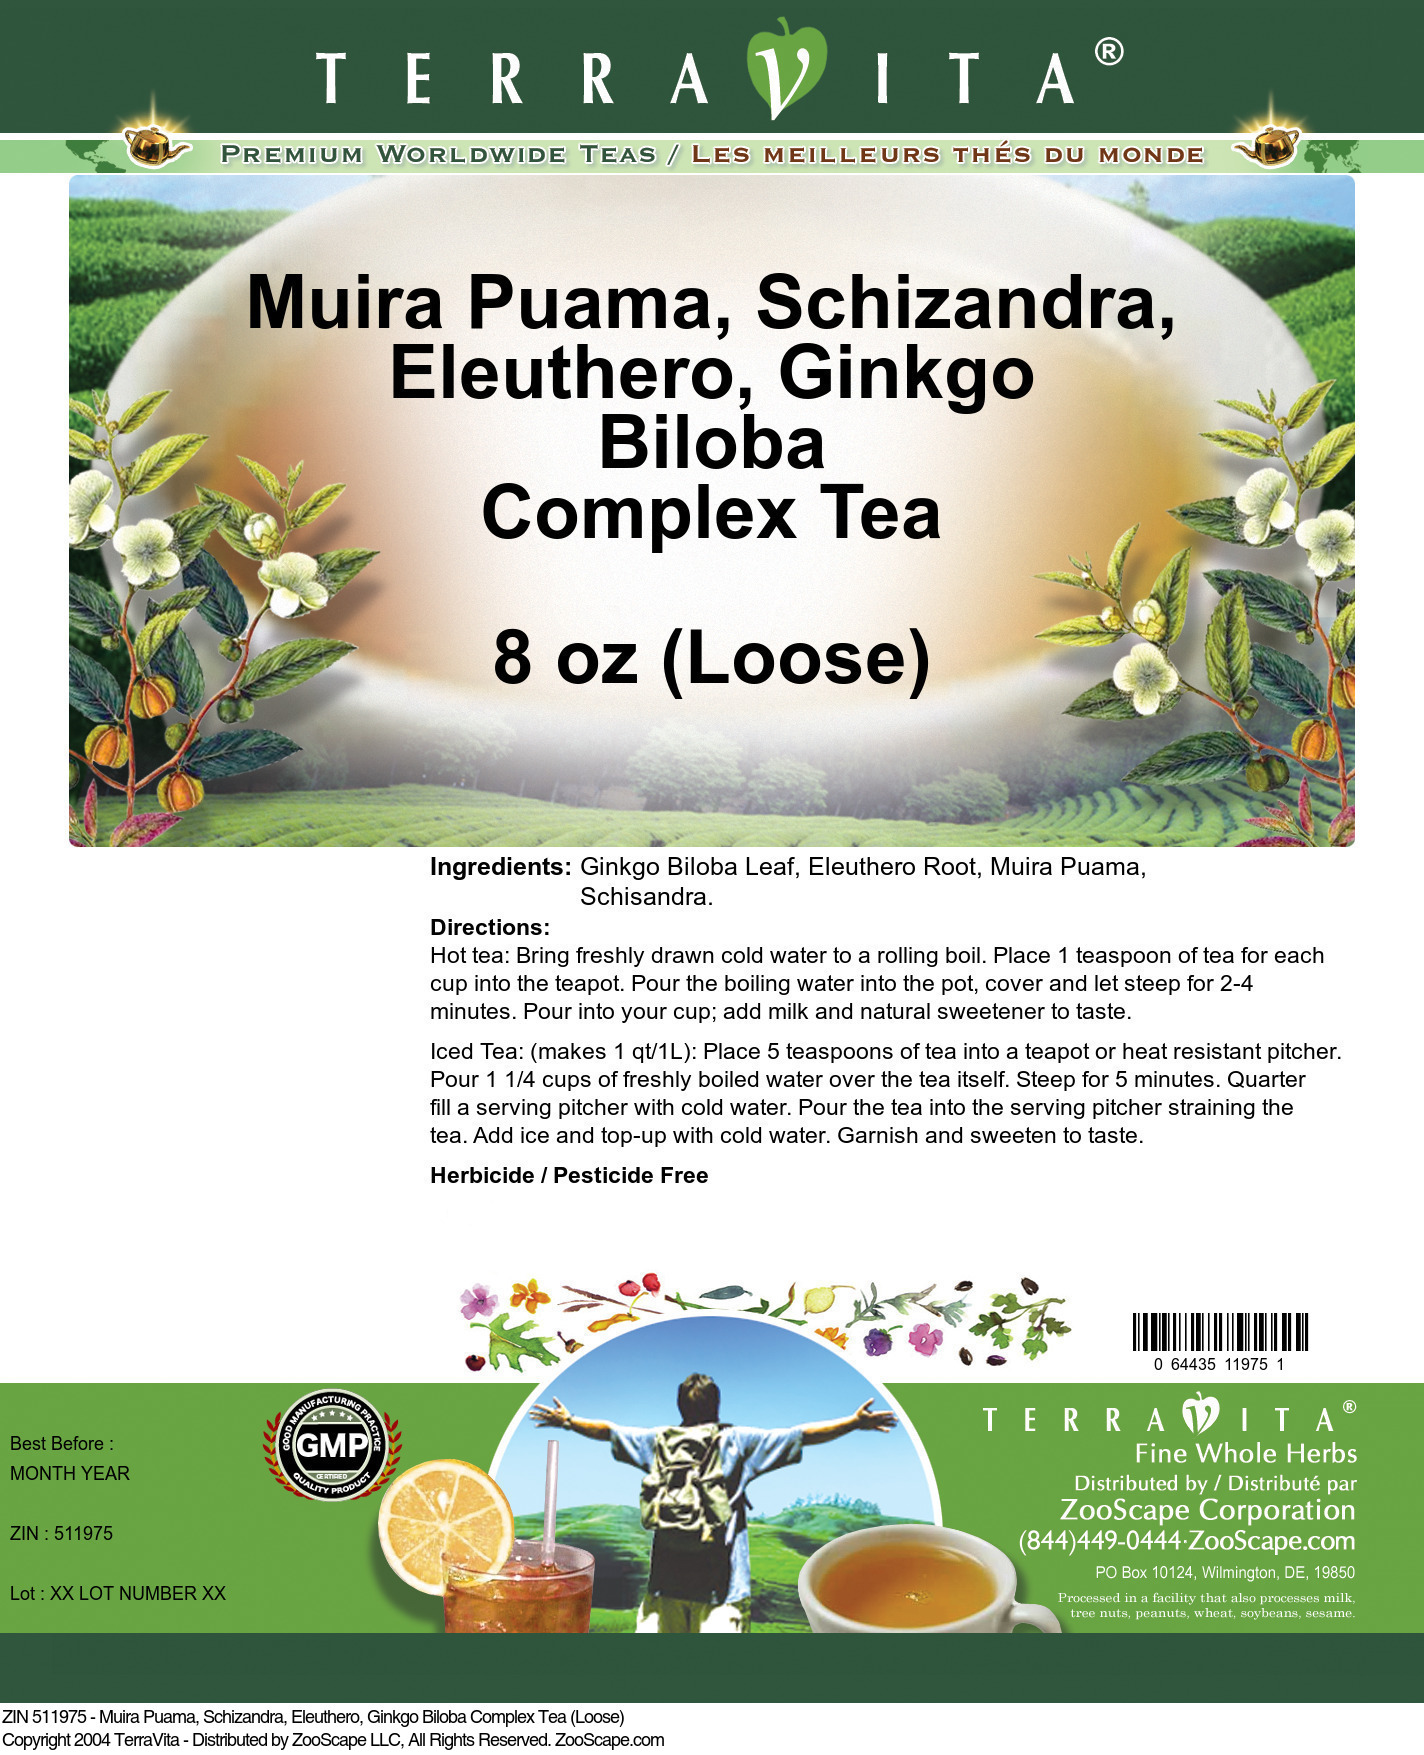 Muira Puama, Schizandra, Eleuthero, Ginkgo Biloba Complex Tea (Loose) - Label